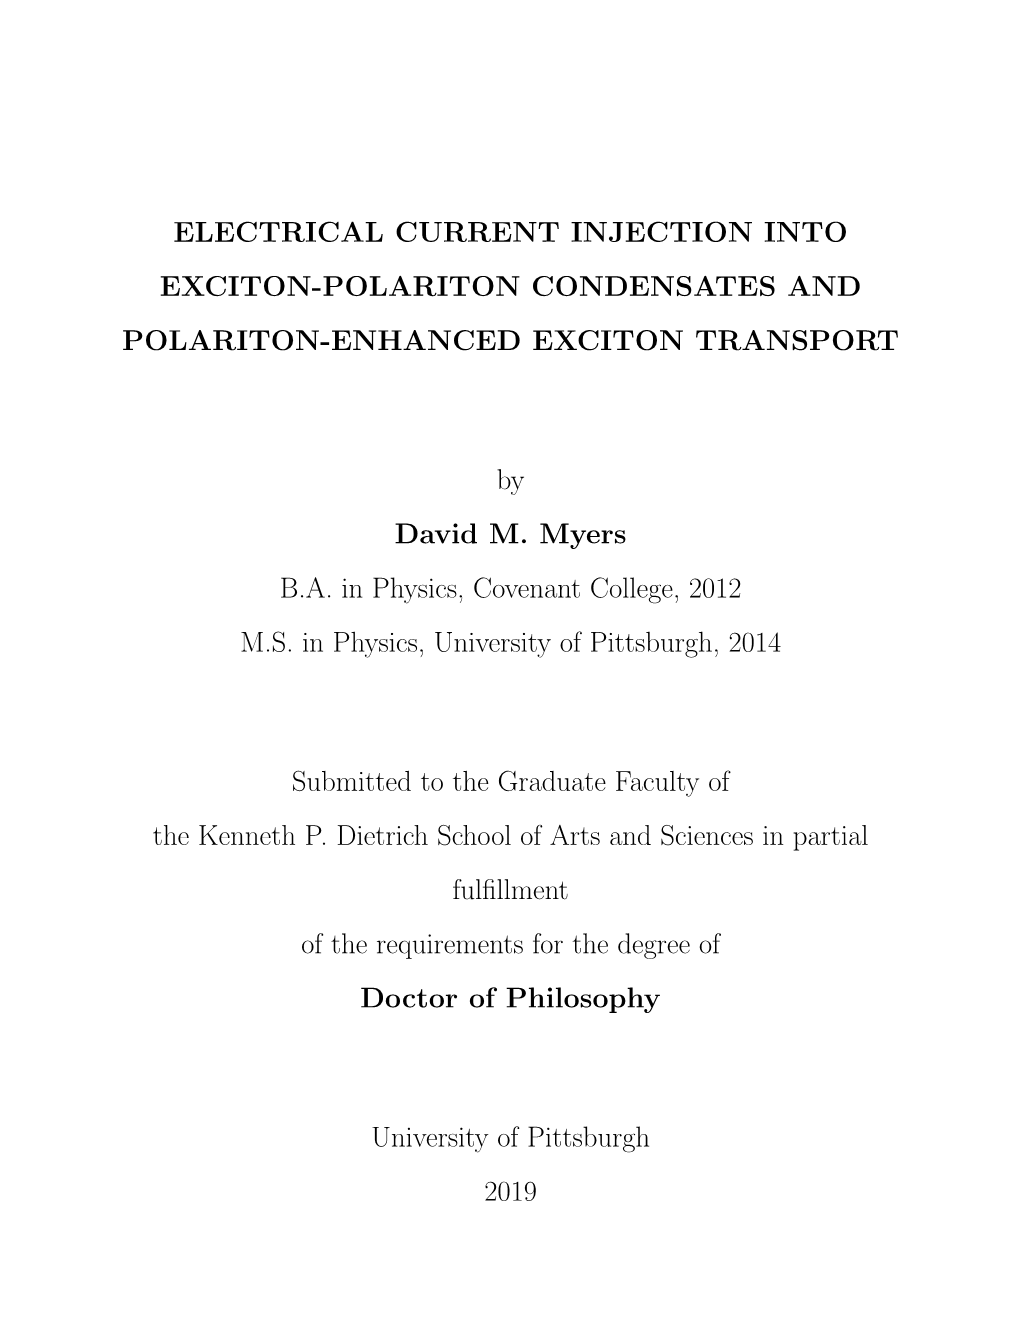 Electrical Current Injection Into Exciton-Polariton Condensates and Polariton-Enhanced Exciton Transport